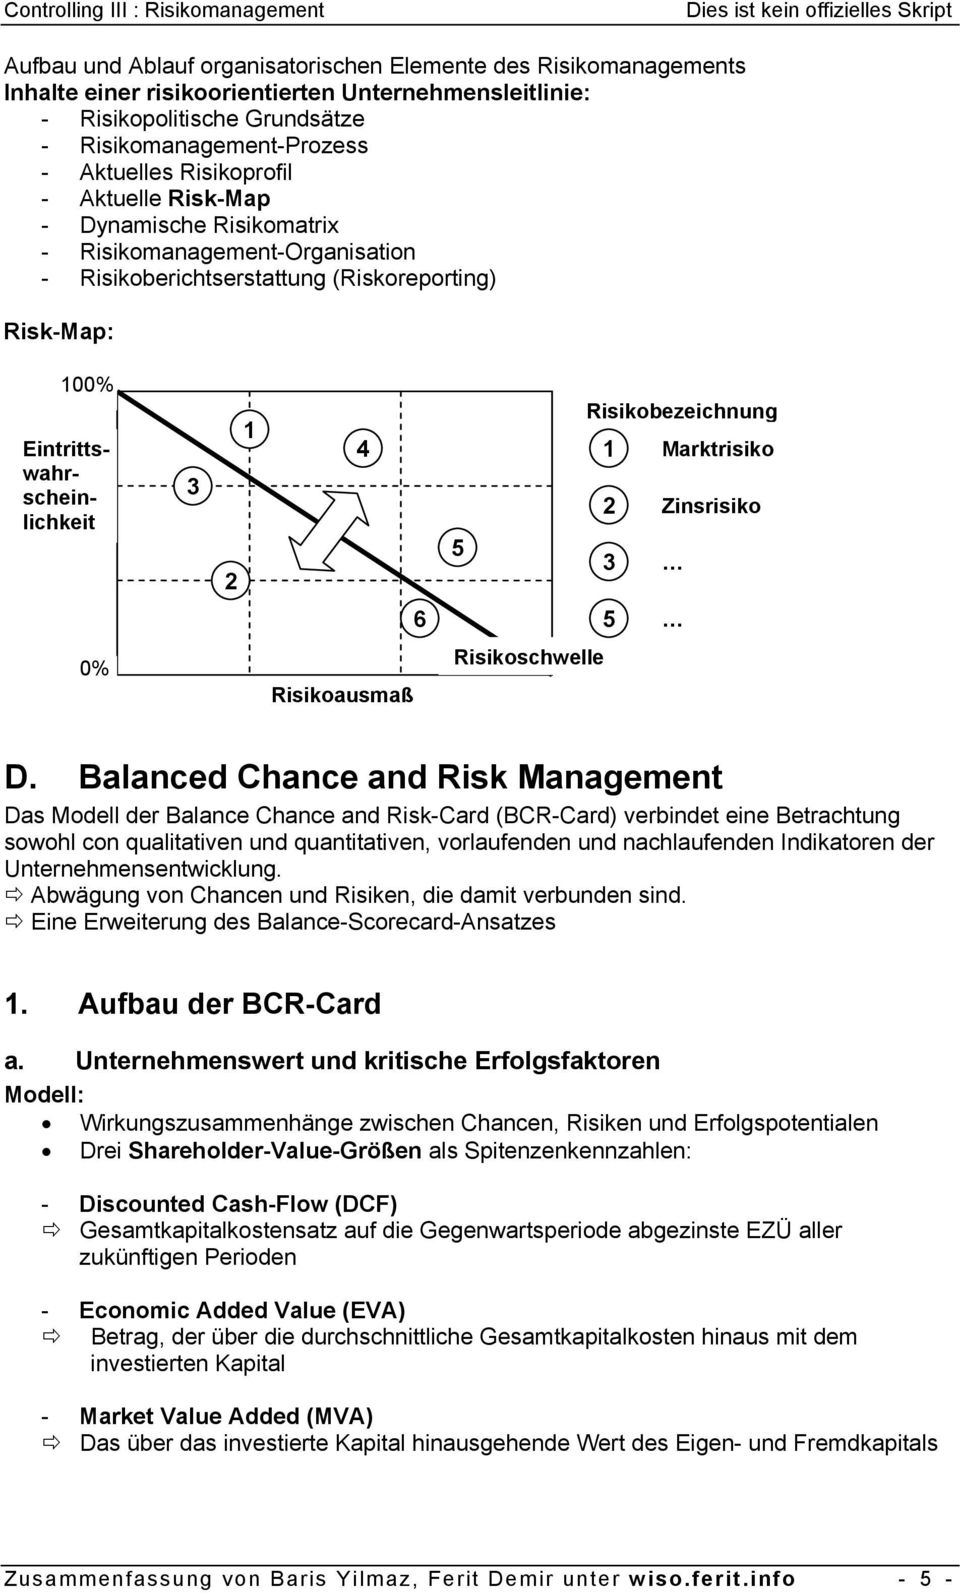 Risikobezeichnung 1 Marktrisiko 2 Zinsrisiko 3 6 5 0% Risikoausmaß Risikoschwelle D.